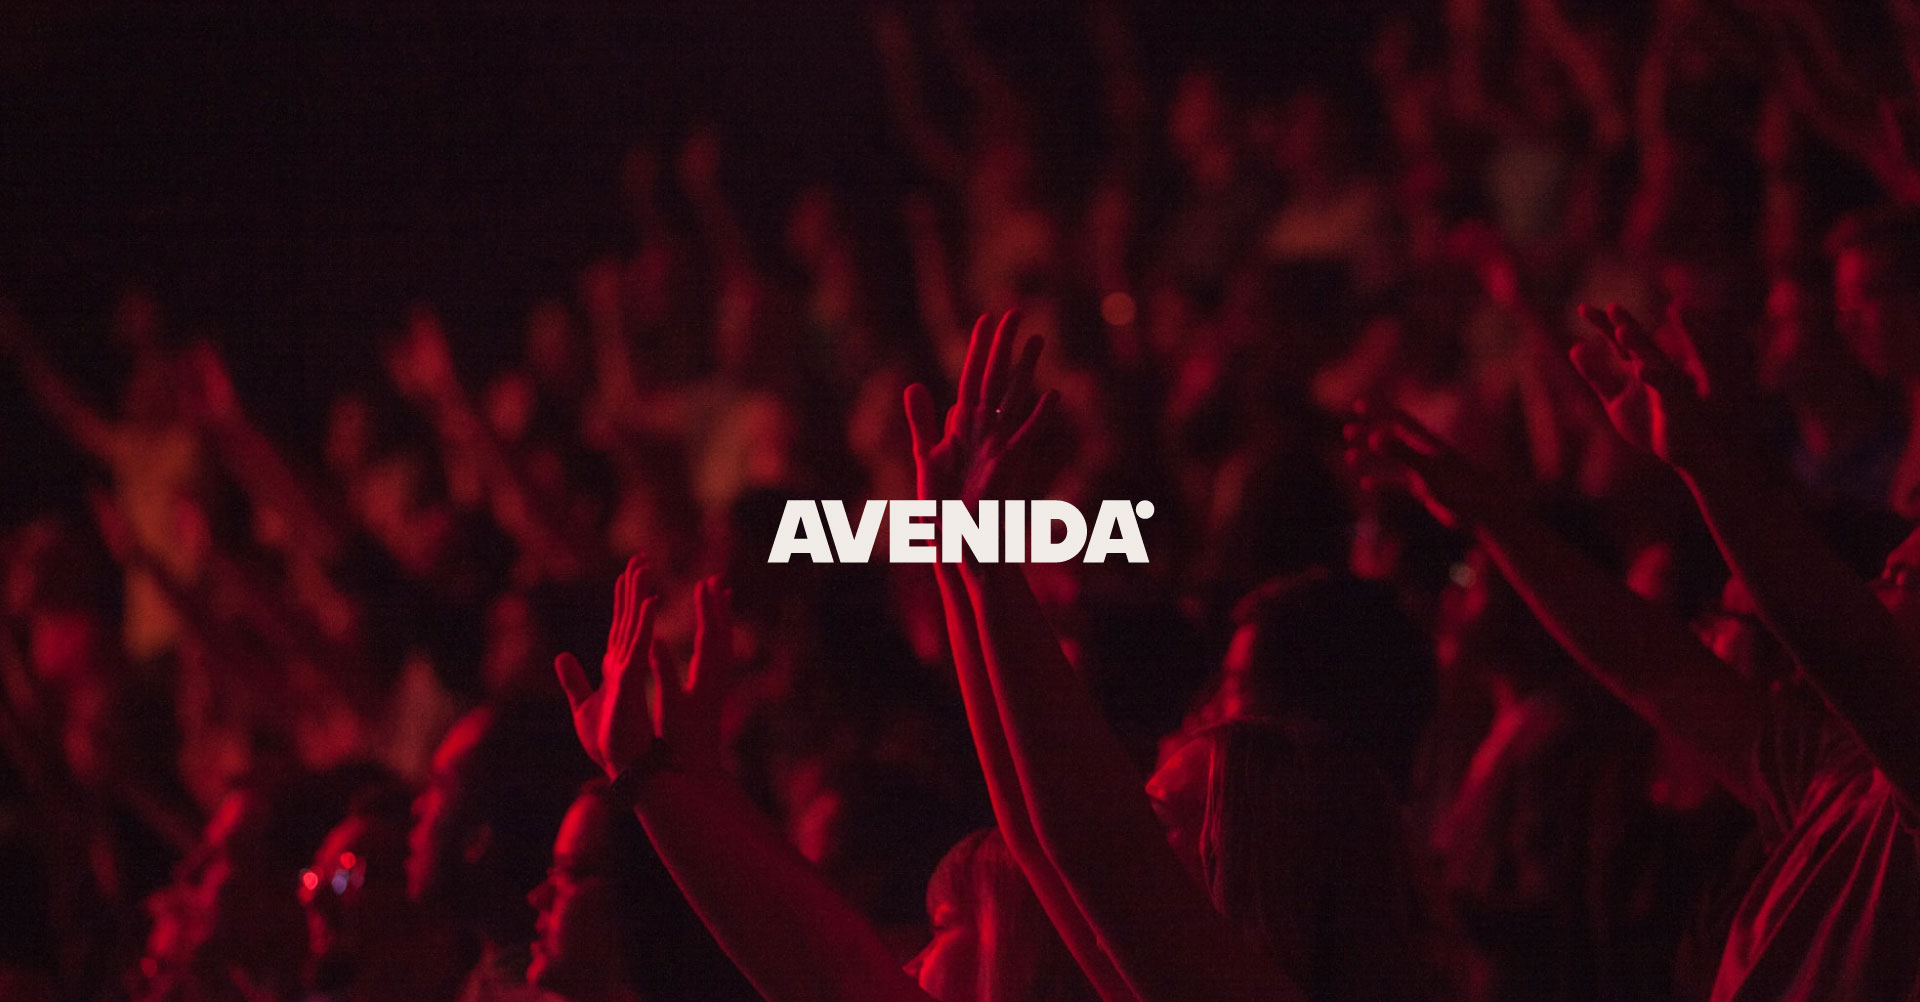 Avenida Concert Venue Brand Identity by Diogo Ferreira